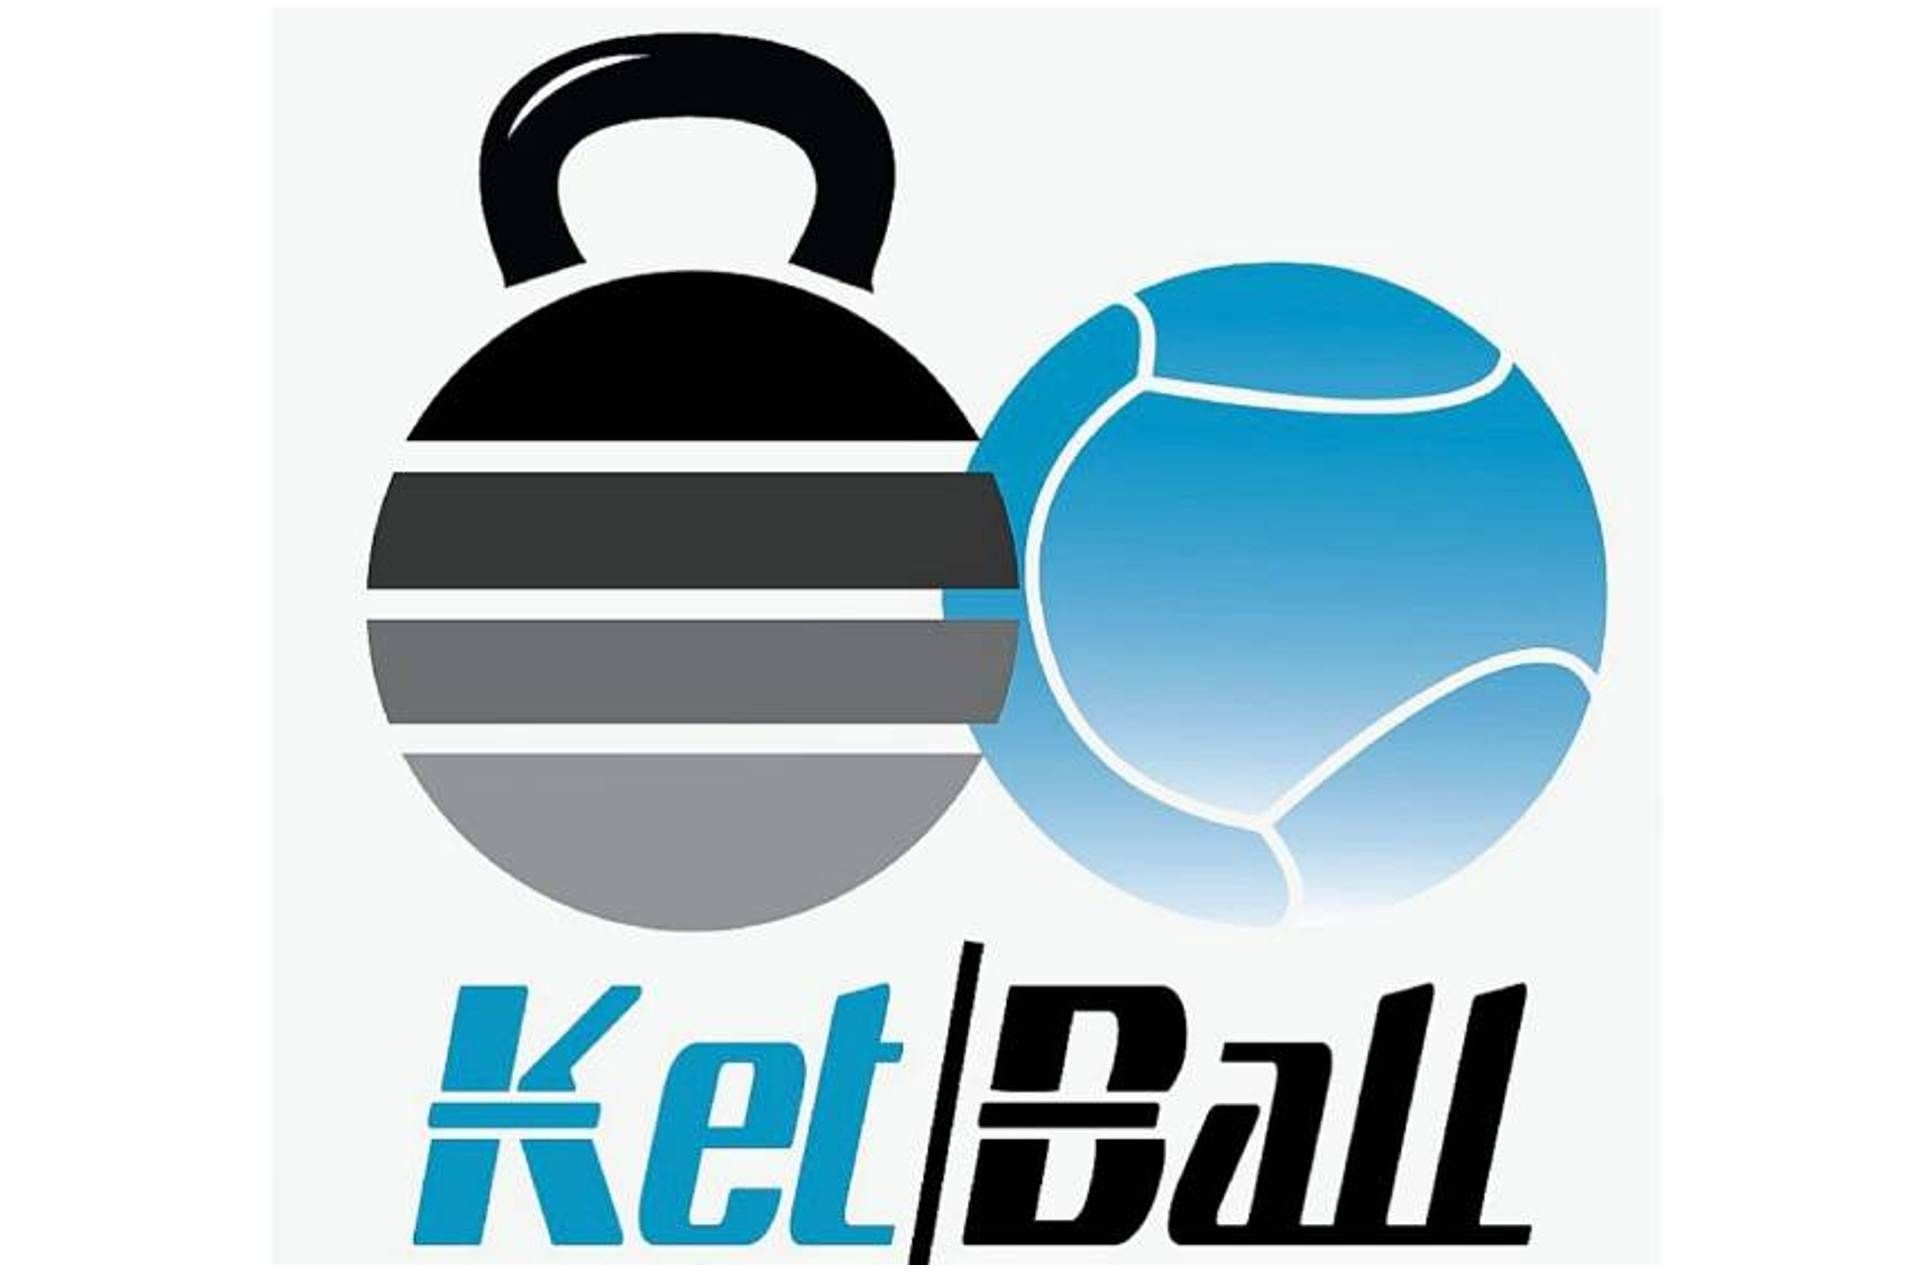 Ket-ball logo crowdfunding